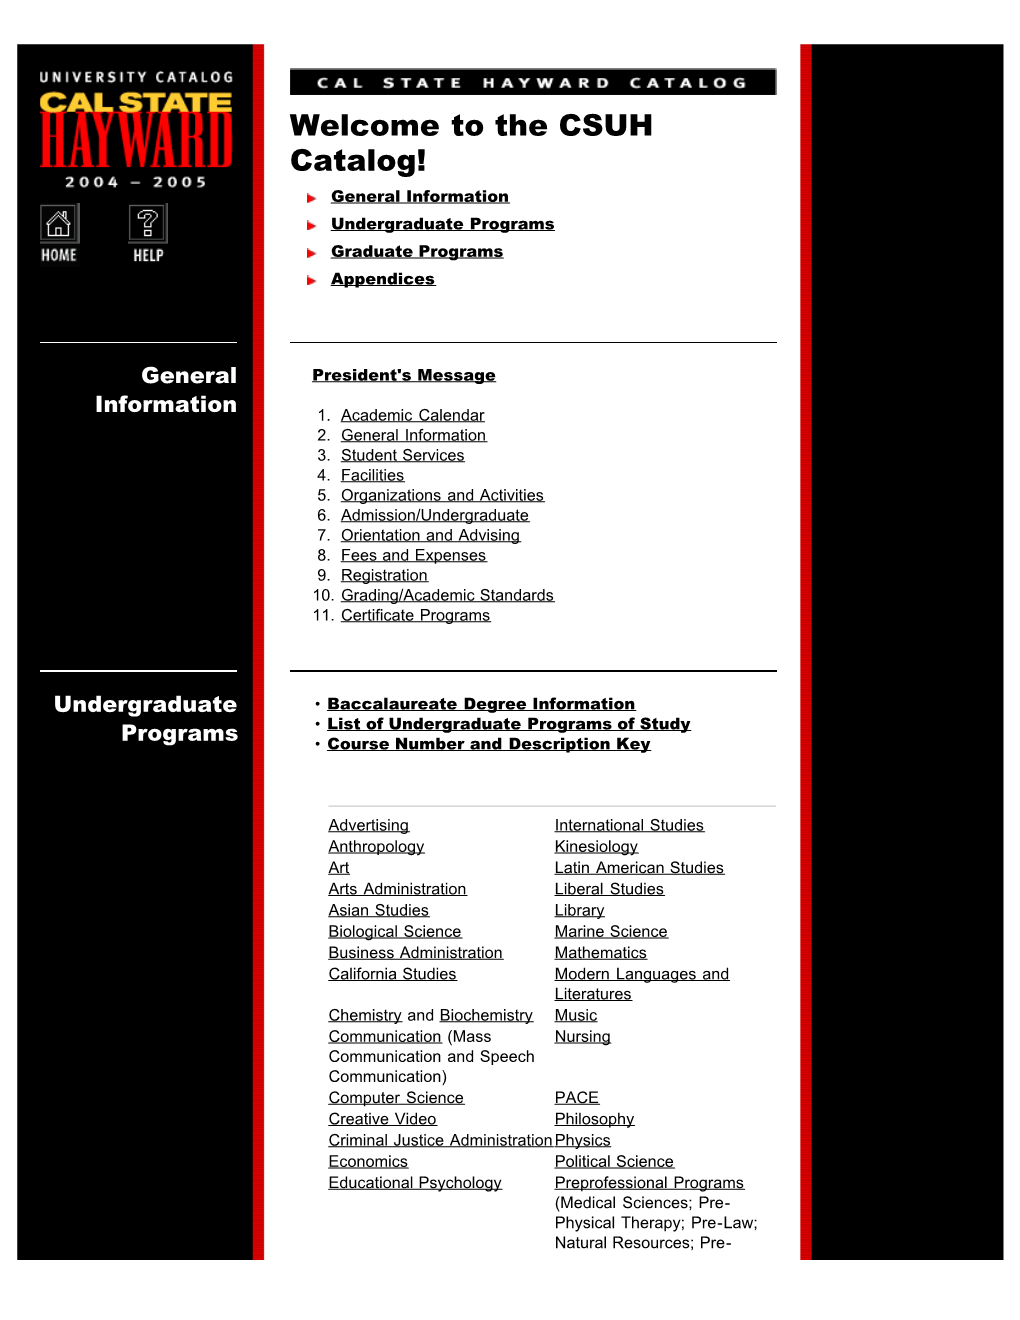 CSUH Catalog 2004-2005